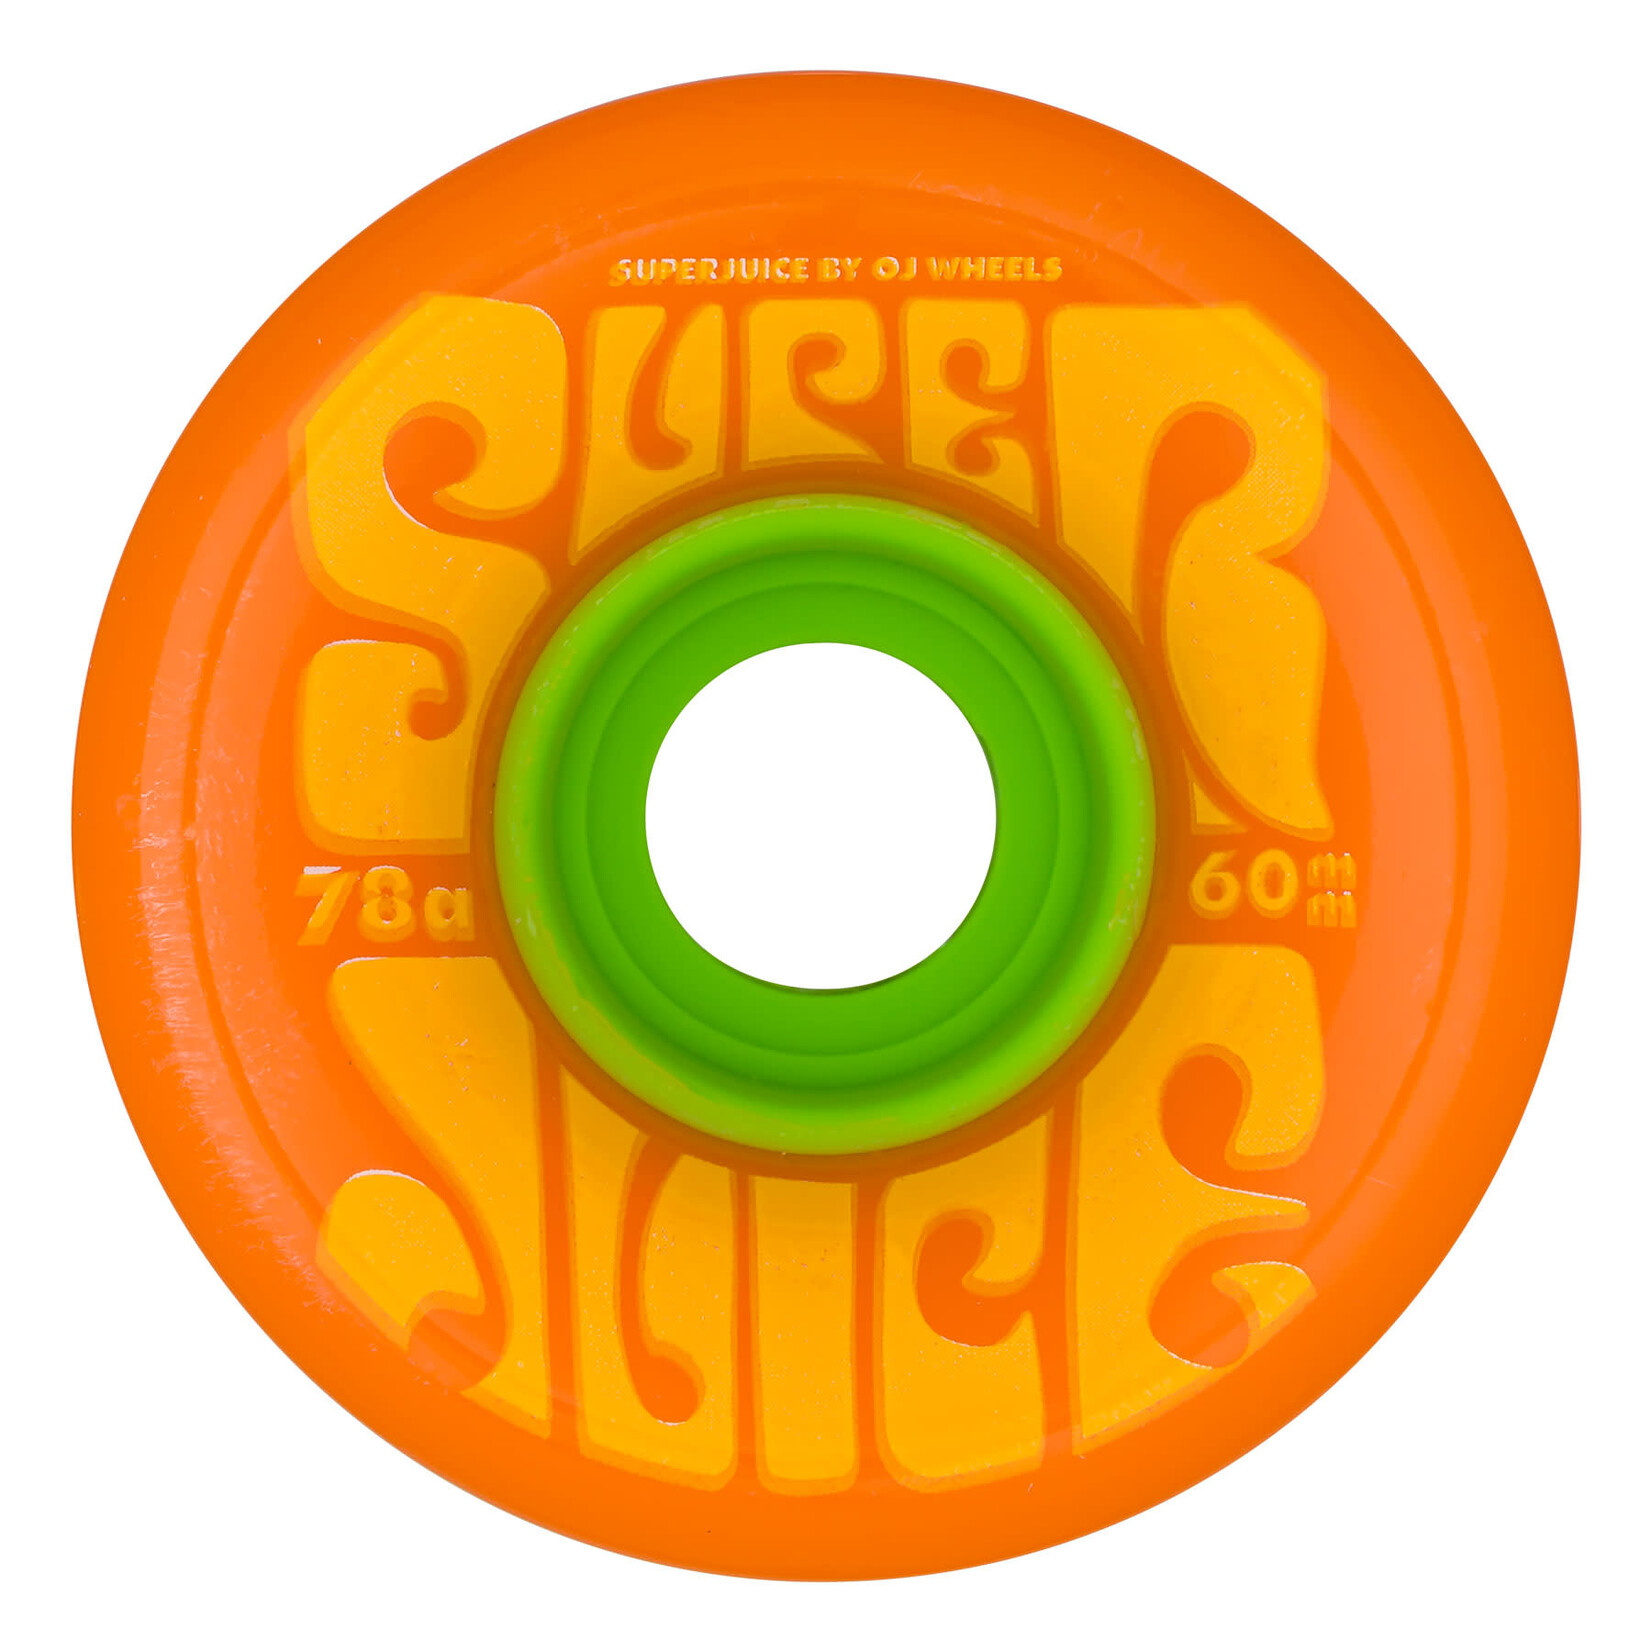 OJ Wheels OJ Super Juice Wheels - 60mm 78a - Citrus (Set of 4)